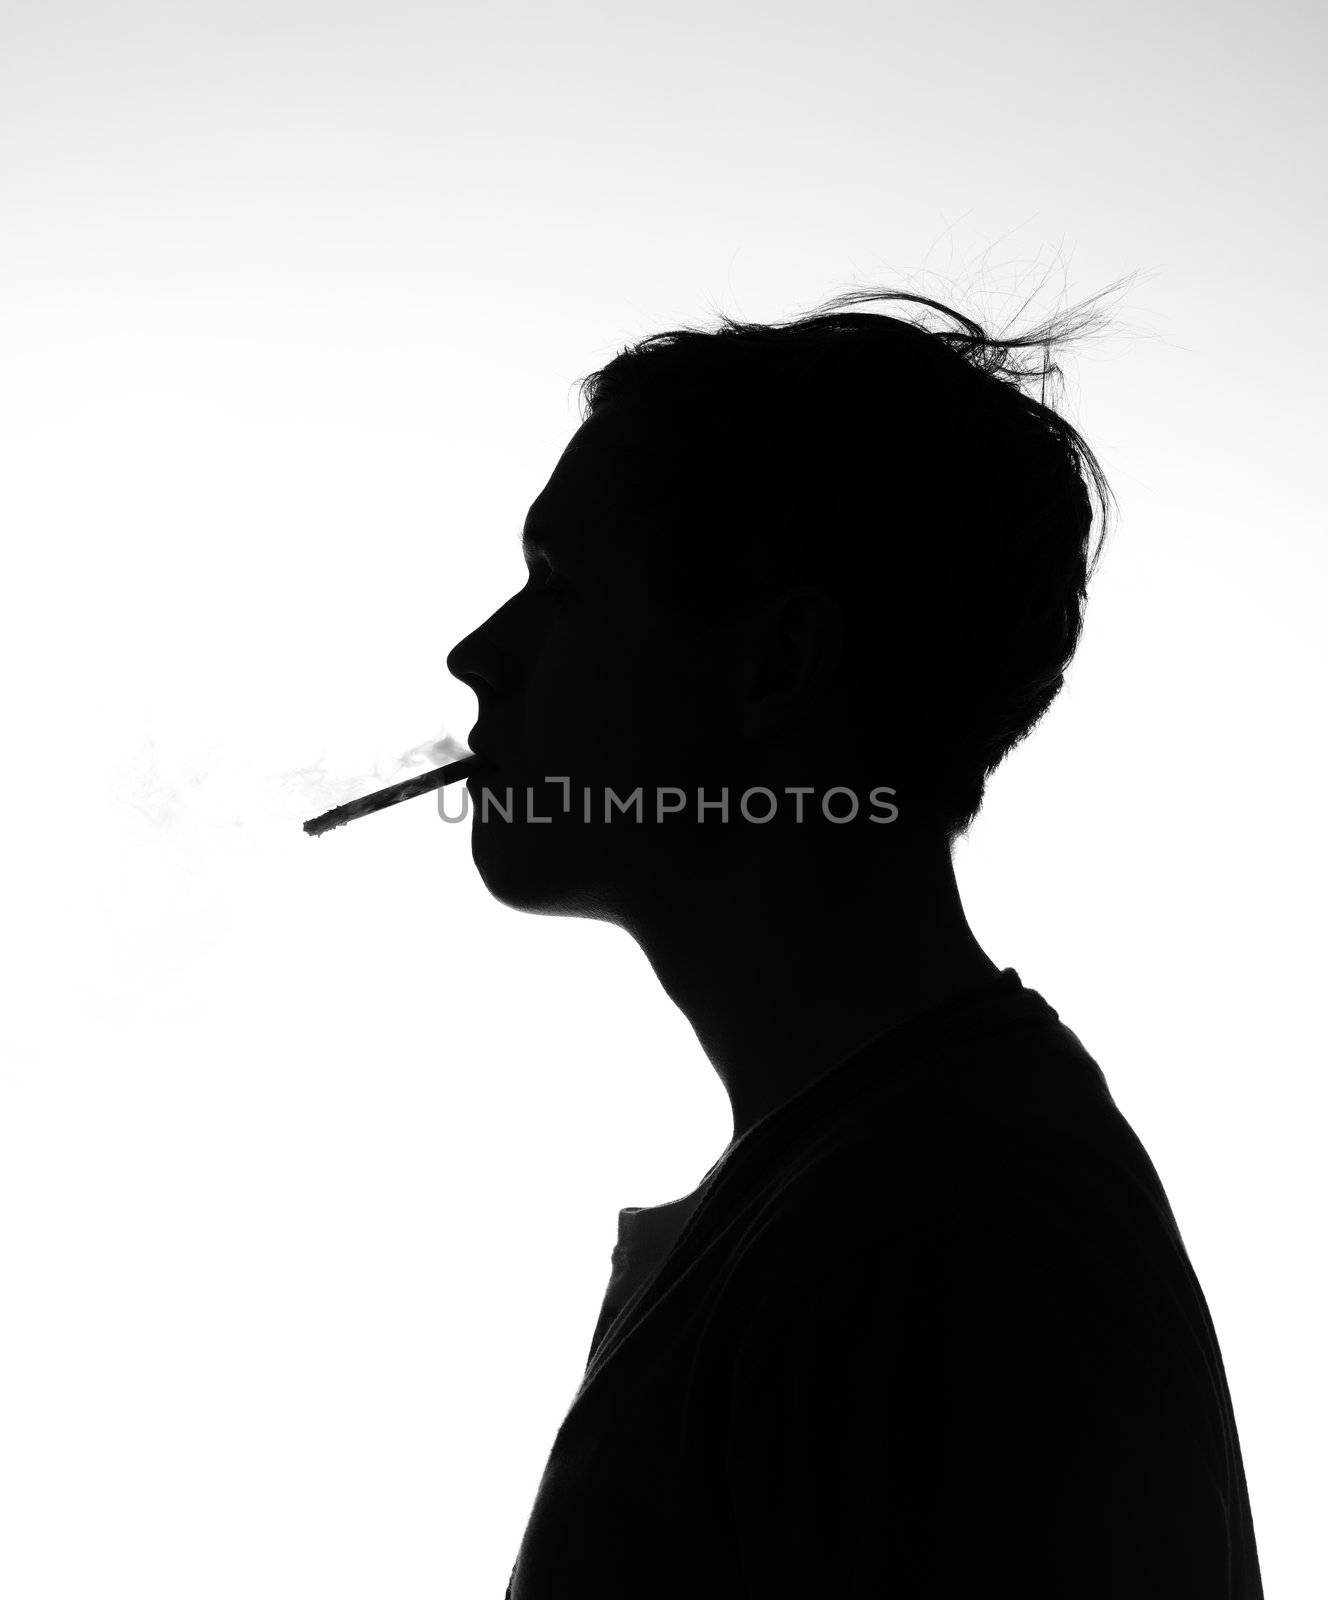 A man smoking